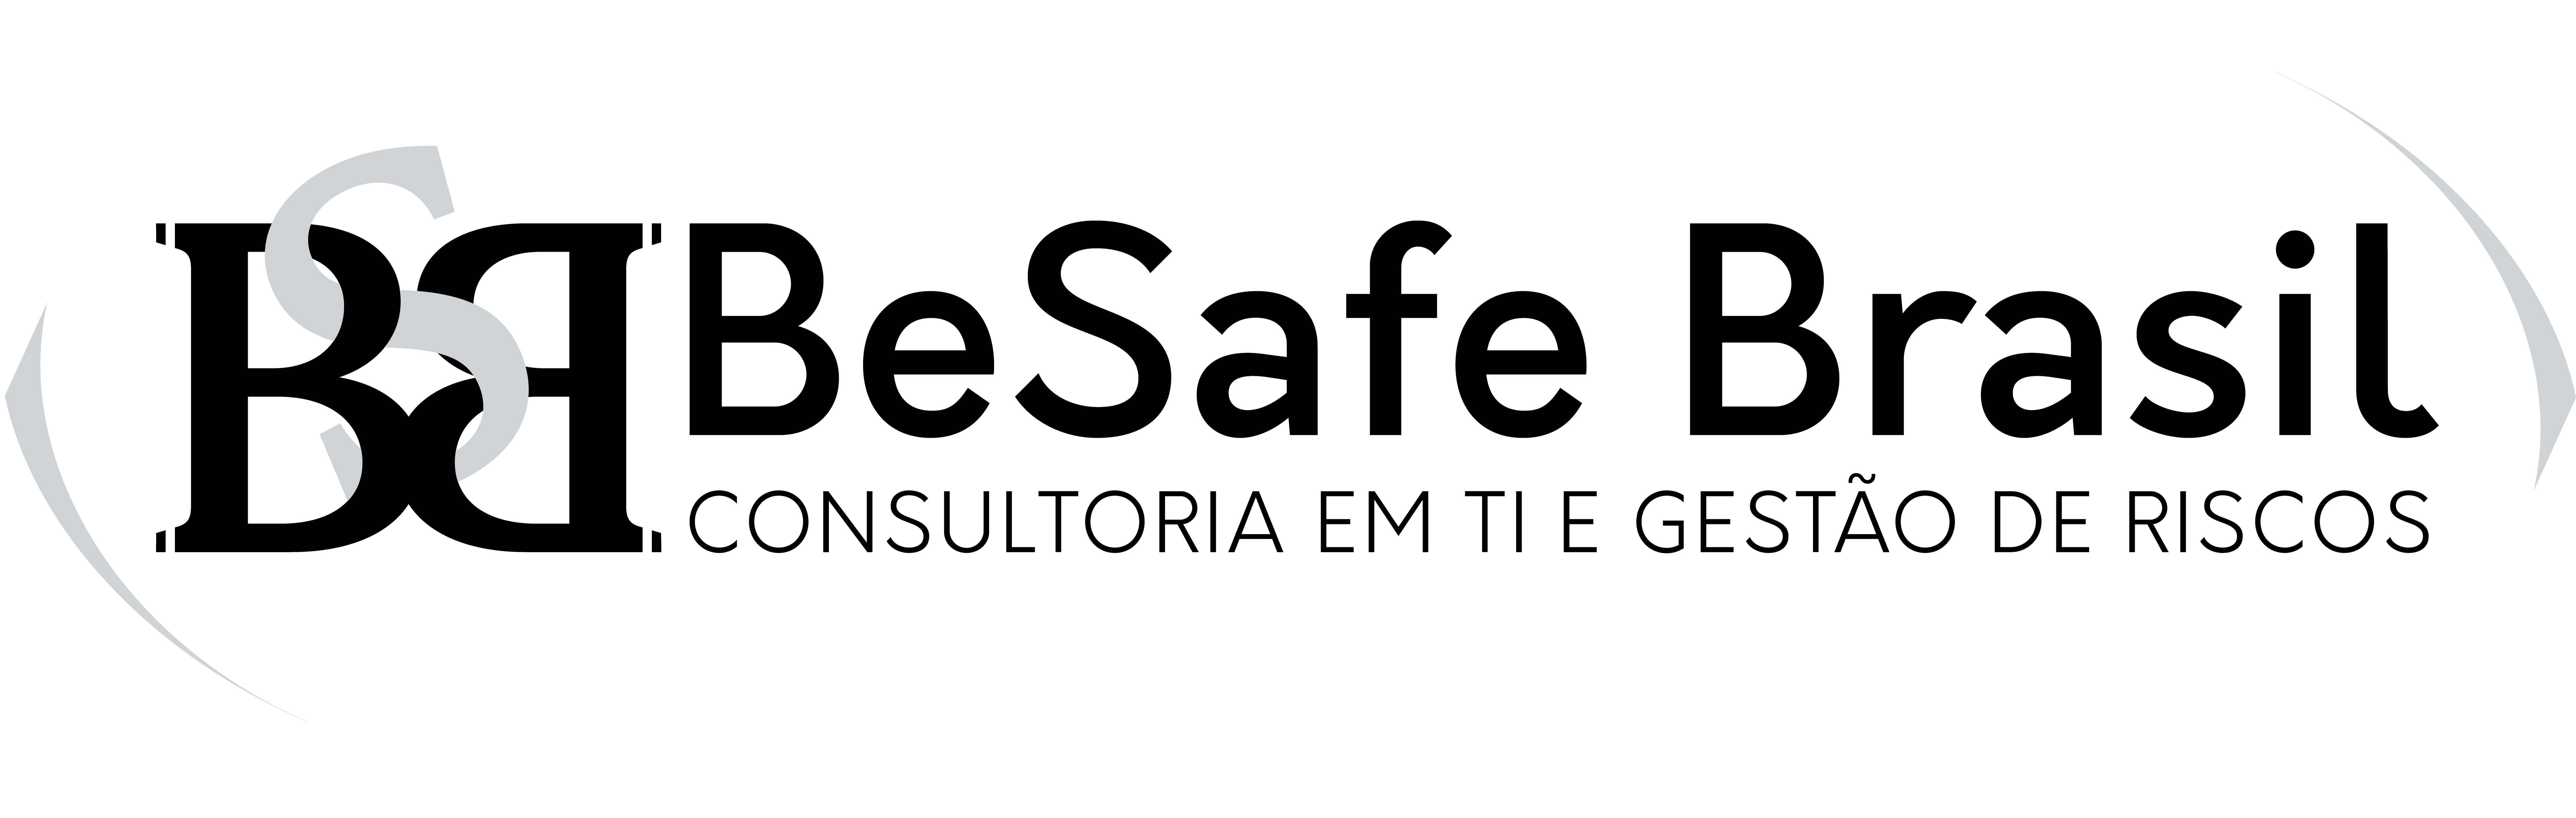 Logomarca 1481.png